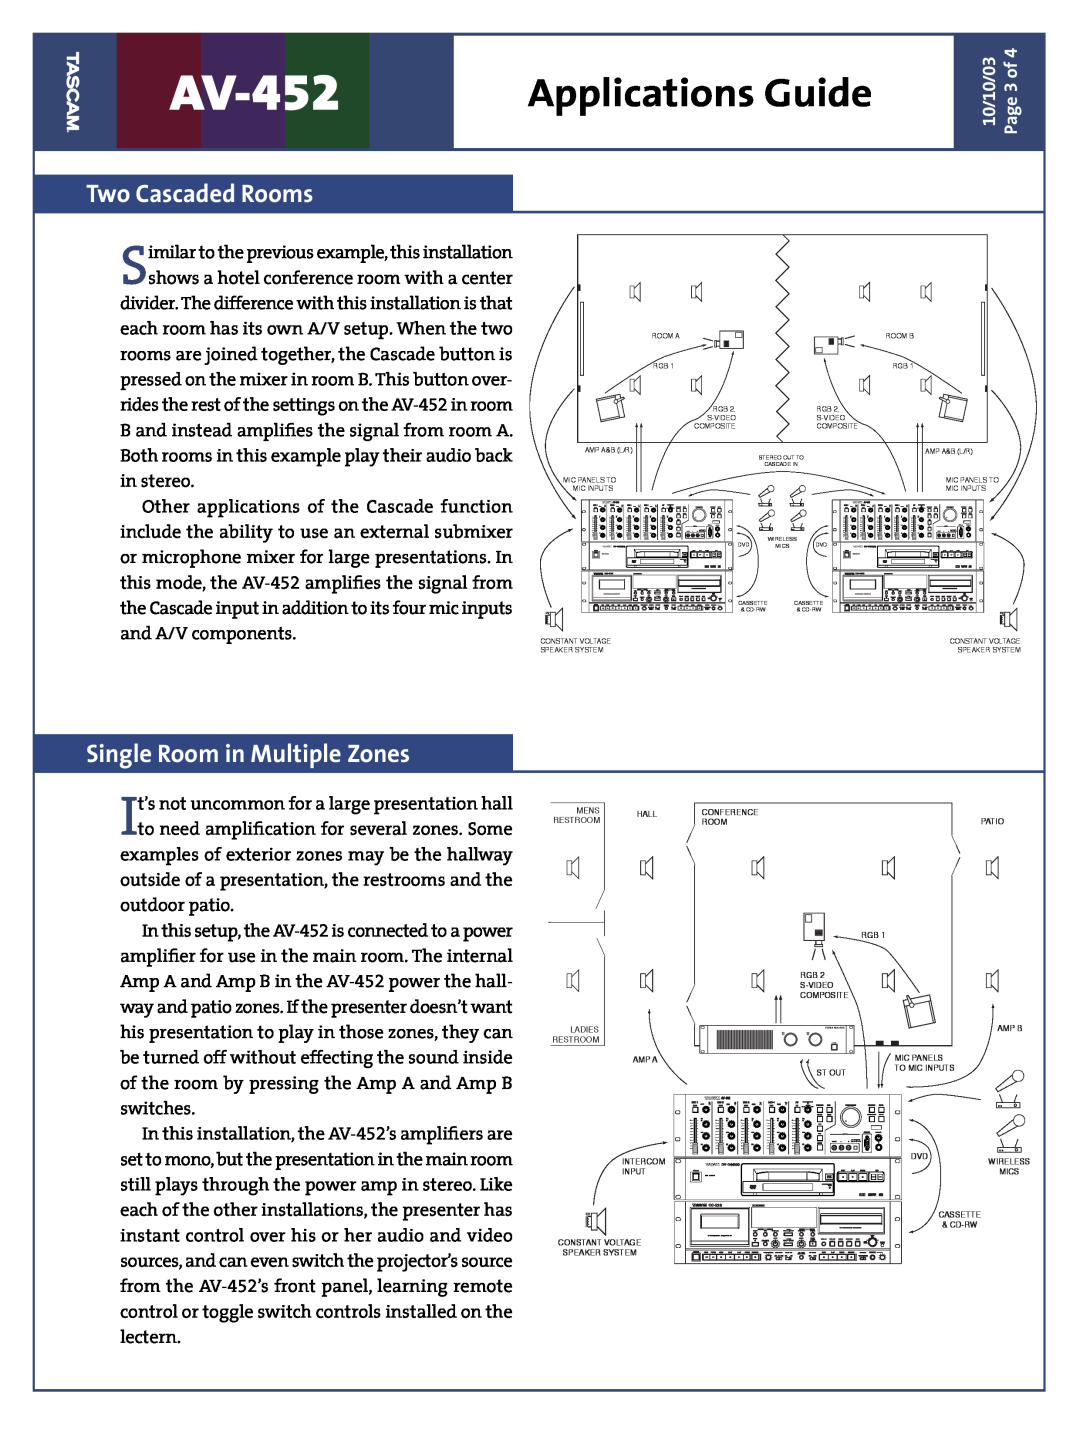 Tascam AV-452 manual Two Cascaded Rooms, Single Room in Multiple Zones, Applications Guide 